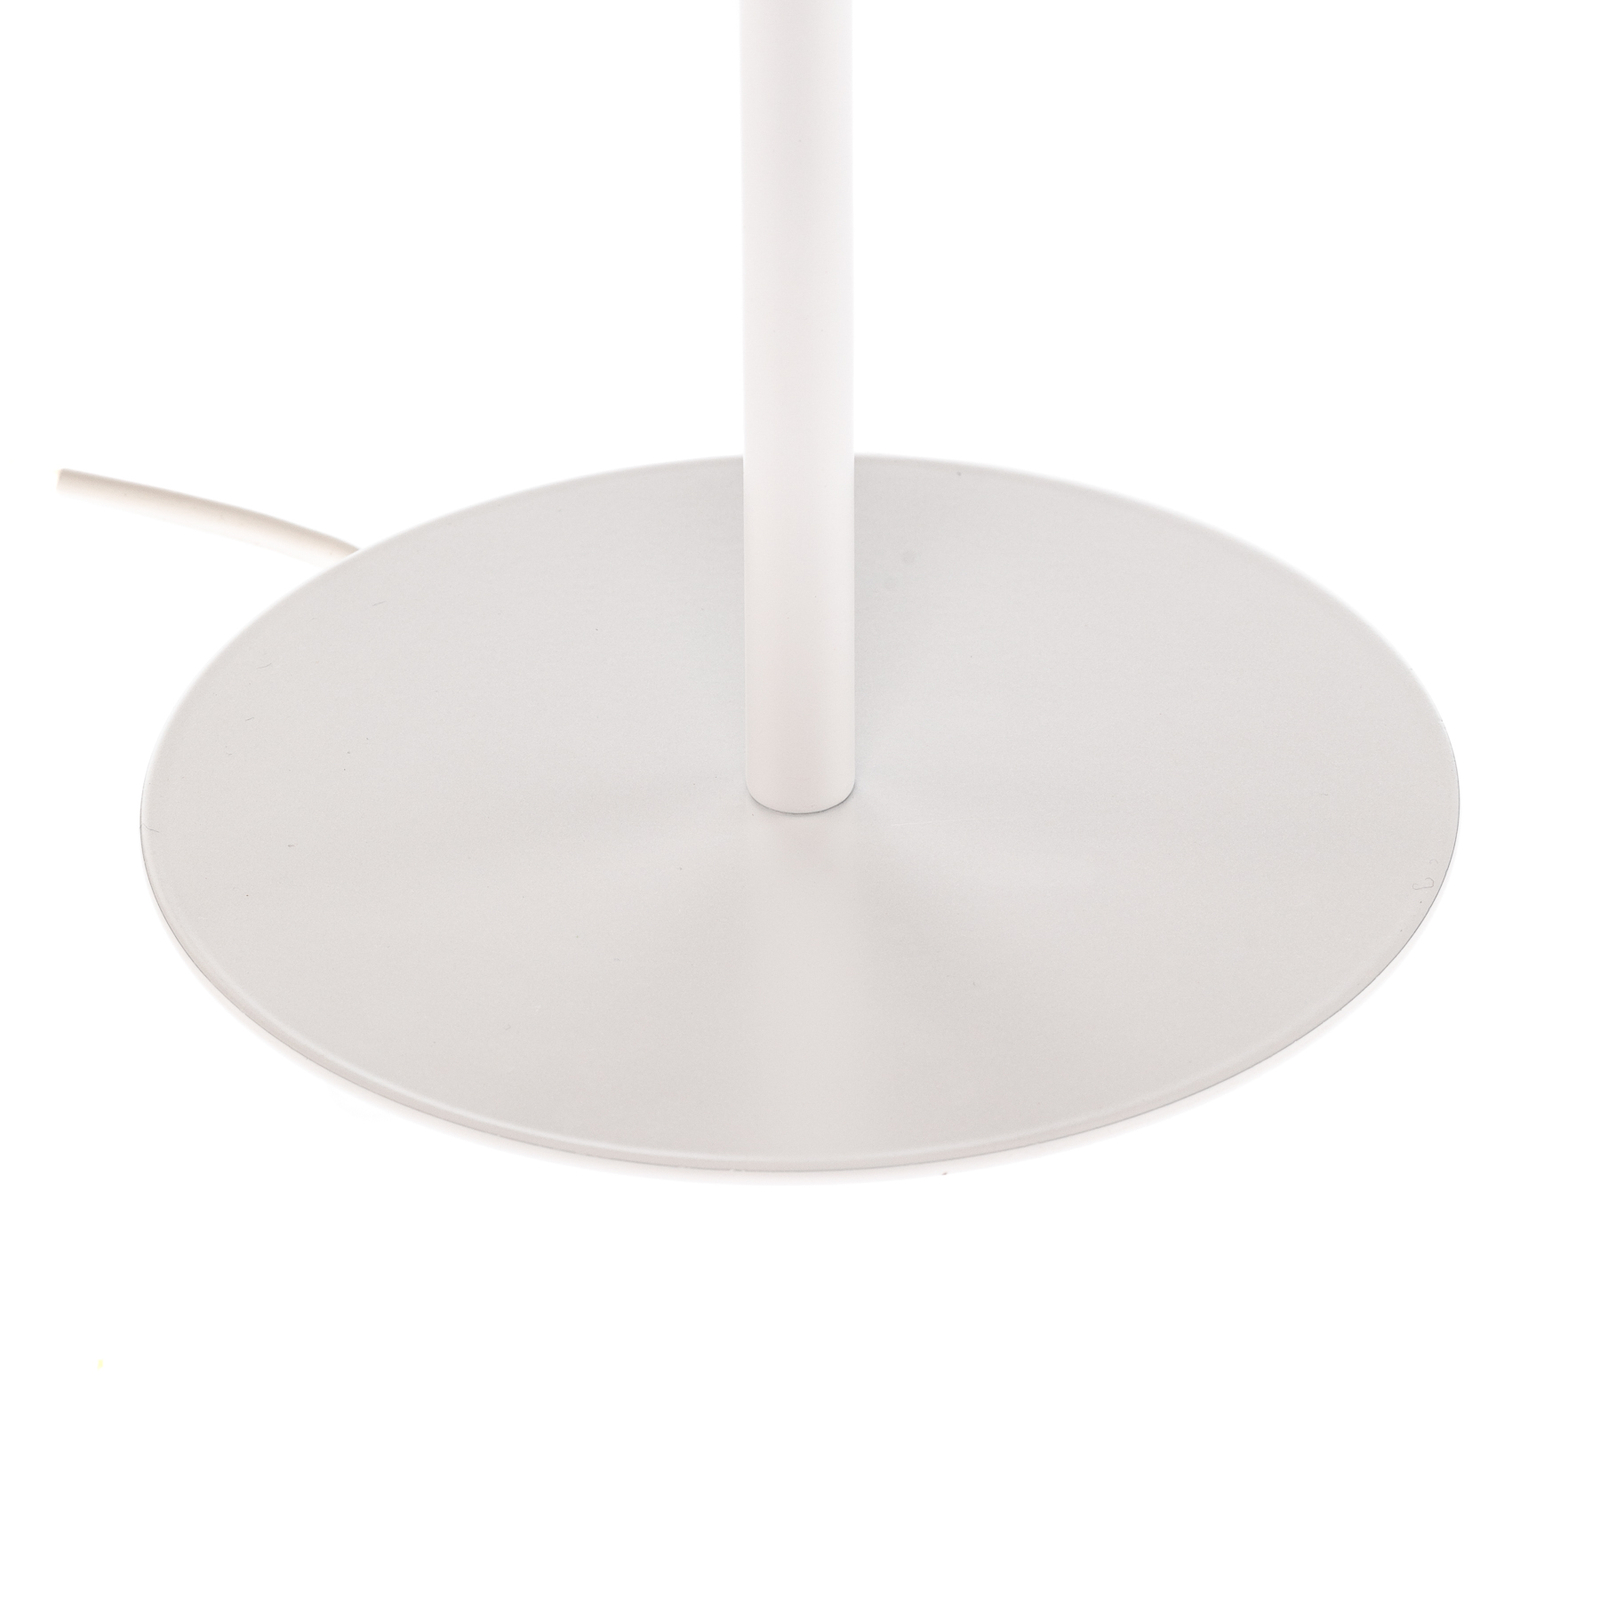 Stalo lempa "Soho", kūgio formos, 33 cm aukščio, balta